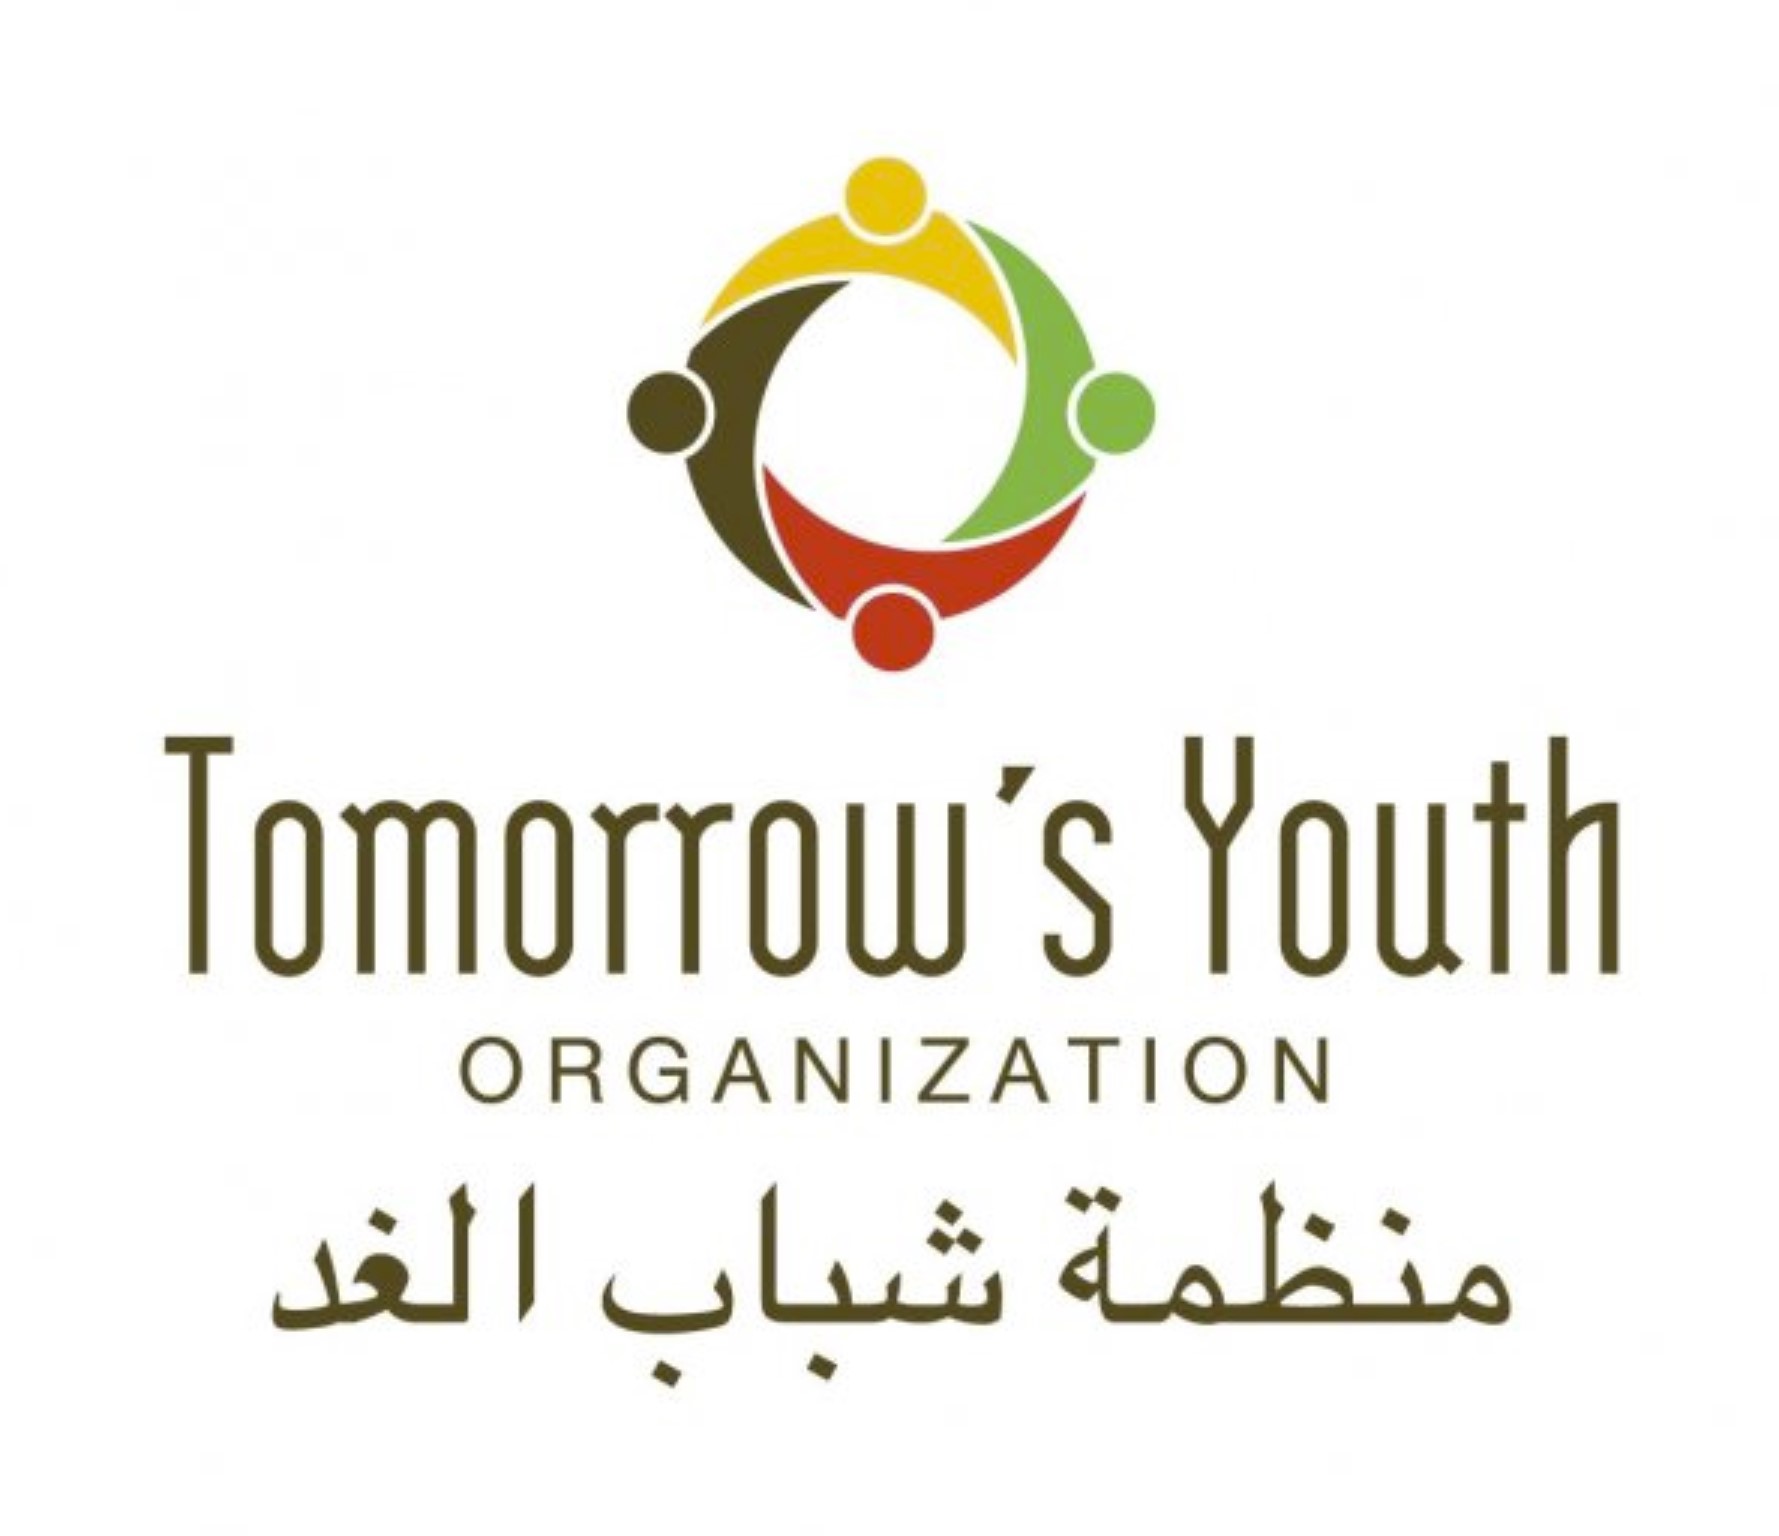 Tomorrow’s Youth Organization